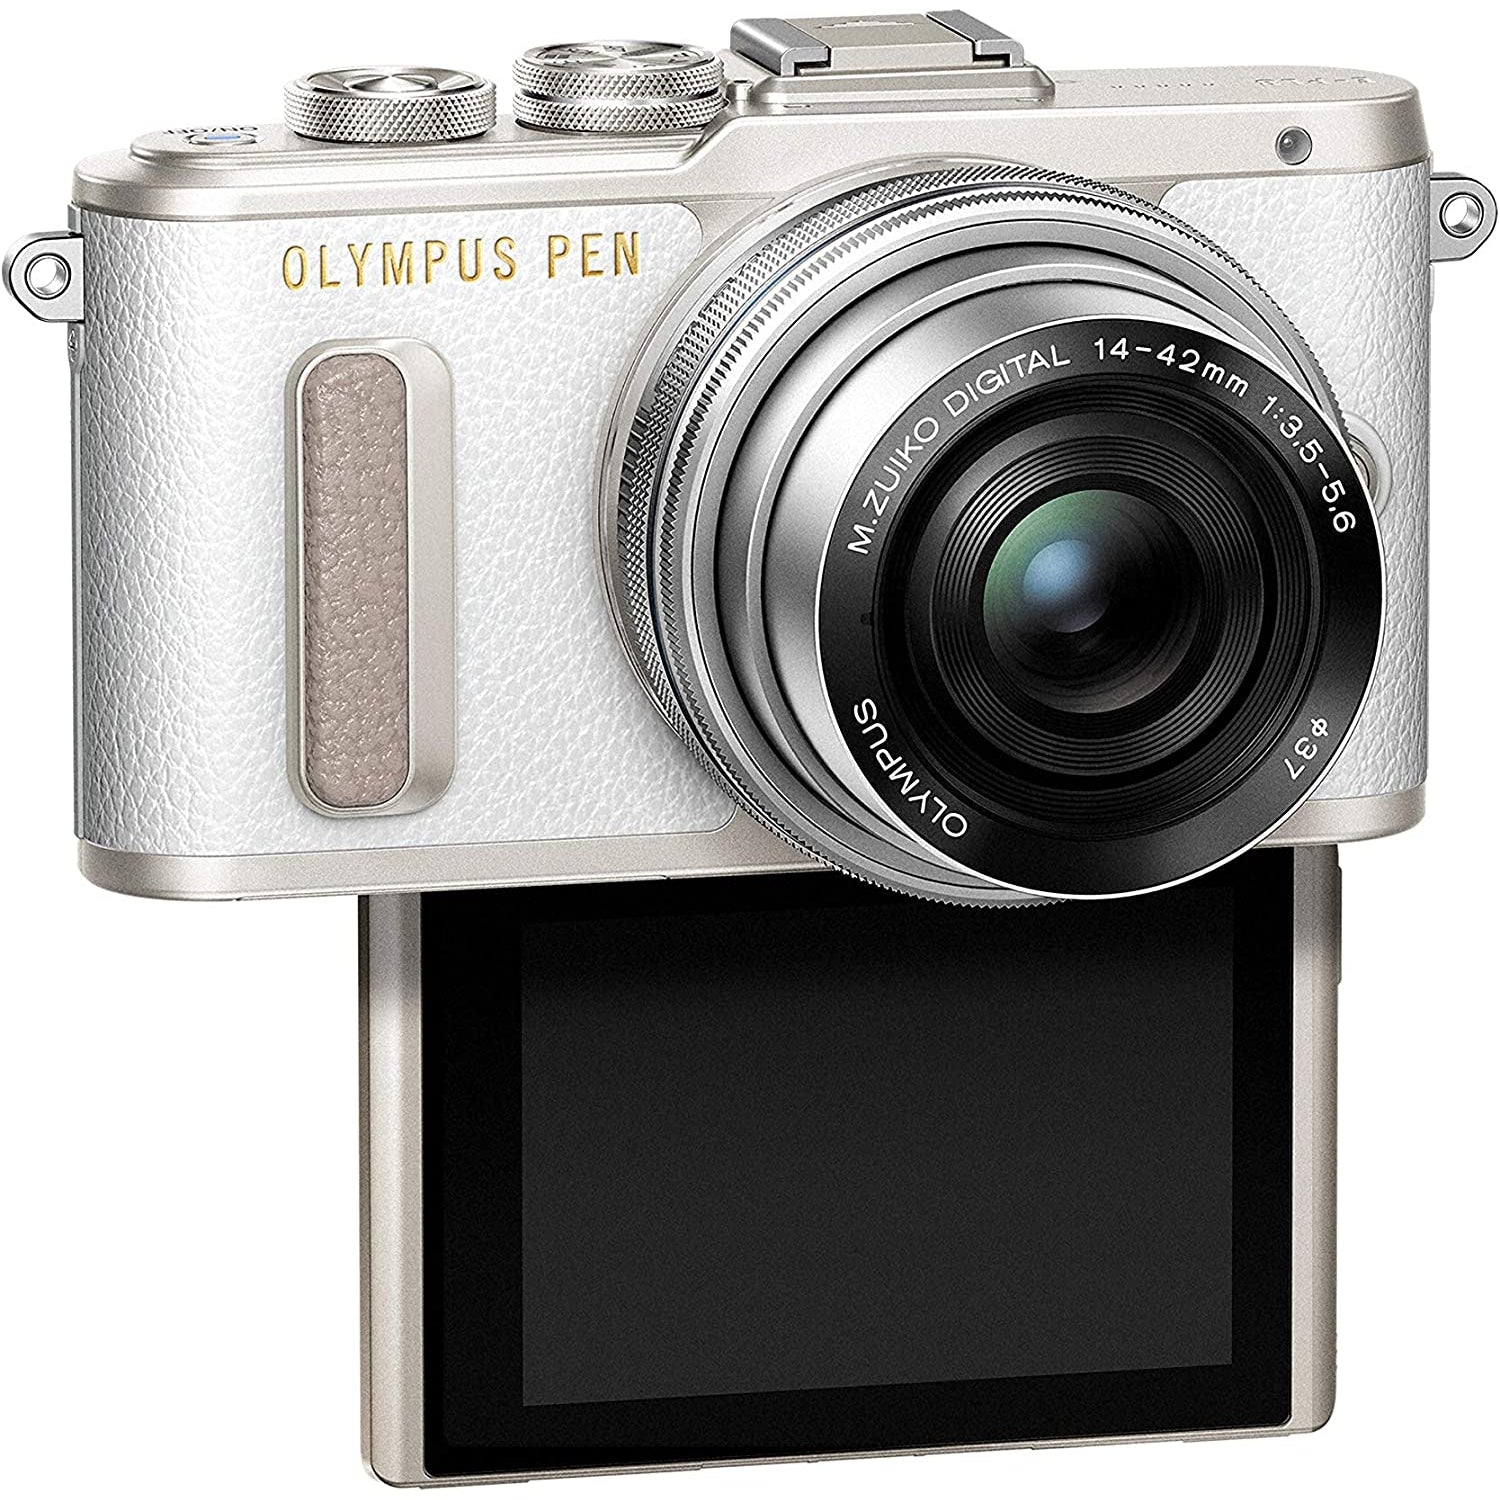 Olympus PEN E-PL8 Kit, 16.4 Megapixel, Image Stabilisation, Electronic Viewfinder, FHD Video, Wi-Fi + M.Zuiko 14-42 mm EZ Zoom Lens, White/Black